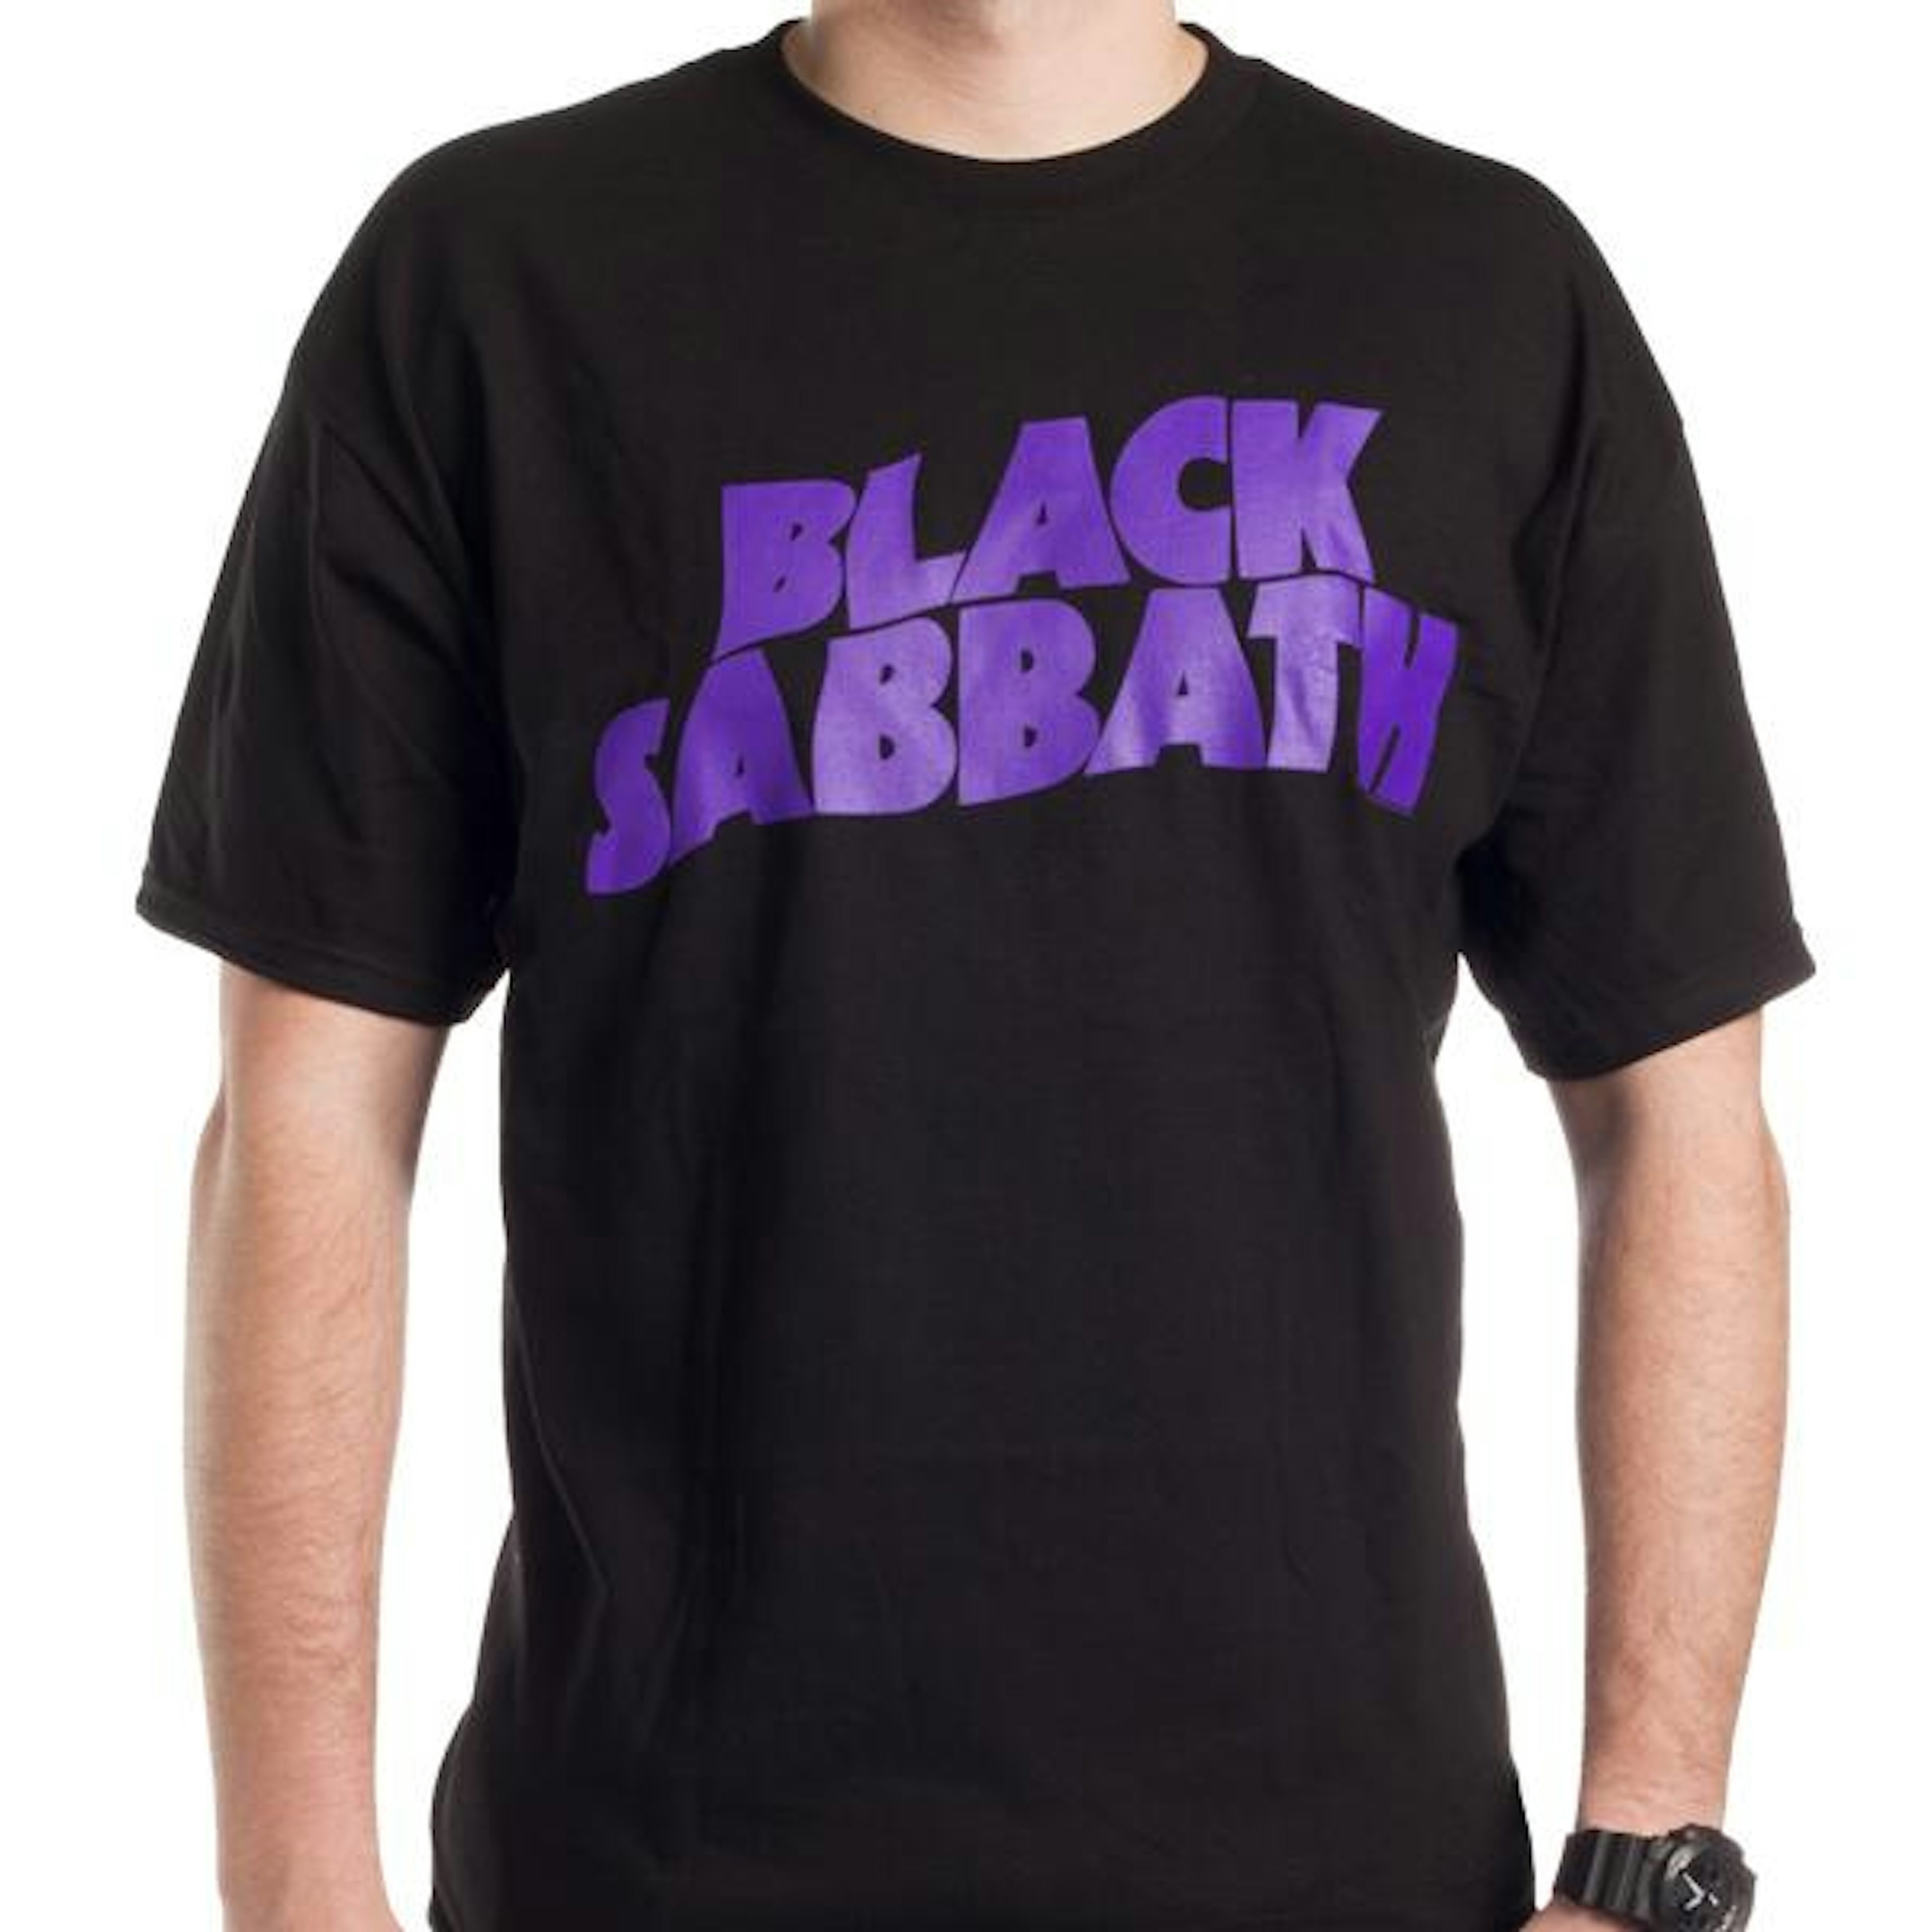 Black Sabbath "Logo"